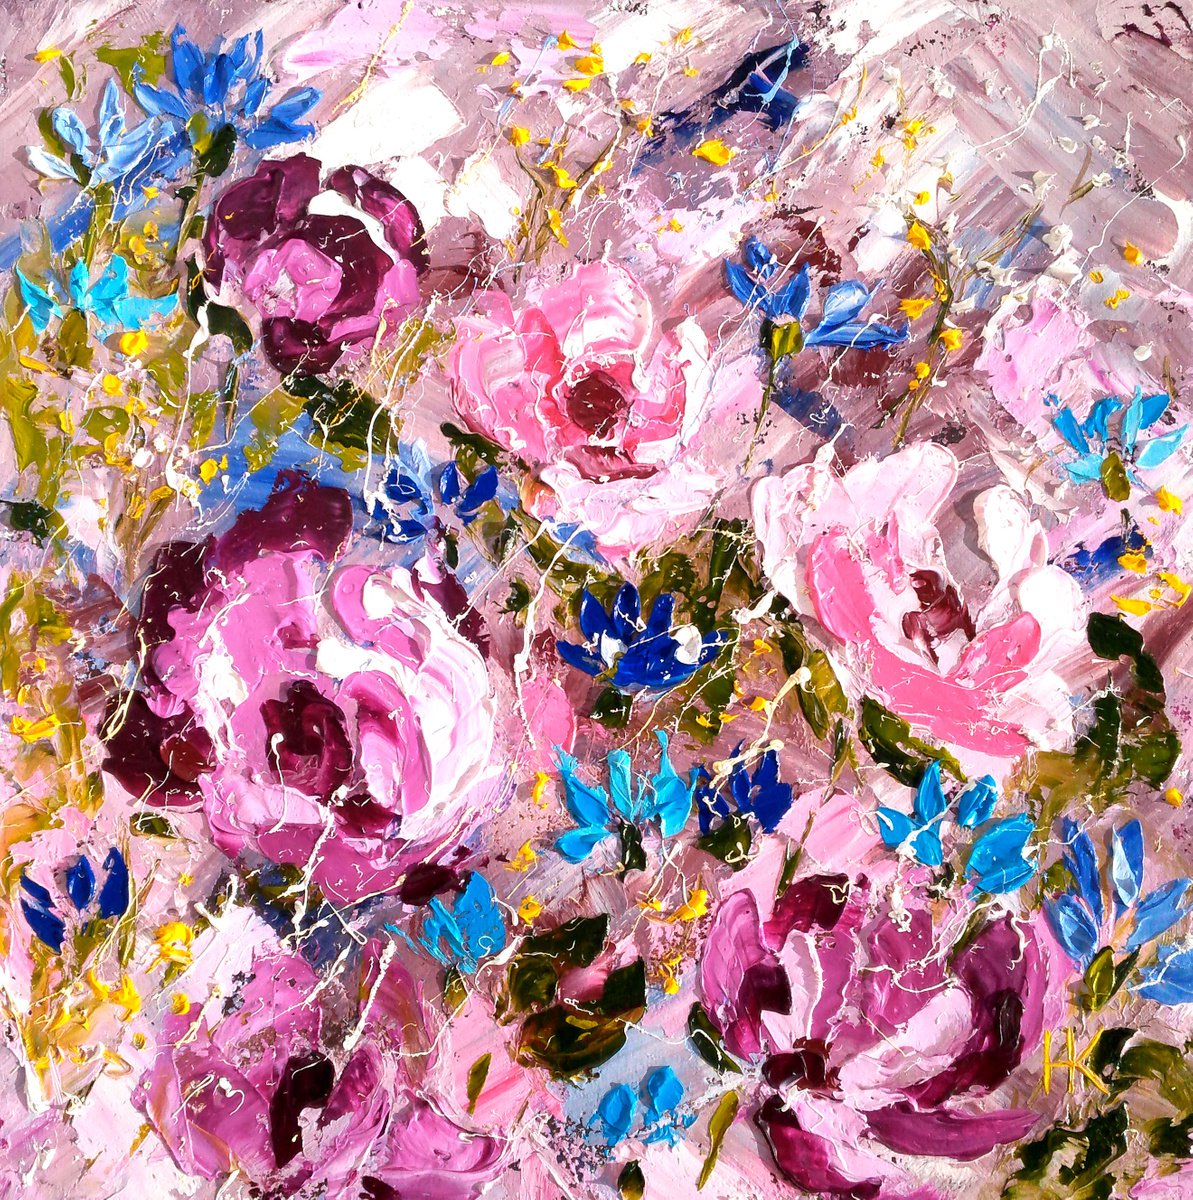 Peony Painting Floral Original Art Cornflowers Impasto Oil Pallete Knife Painting Abstract... by Halyna Kirichenko